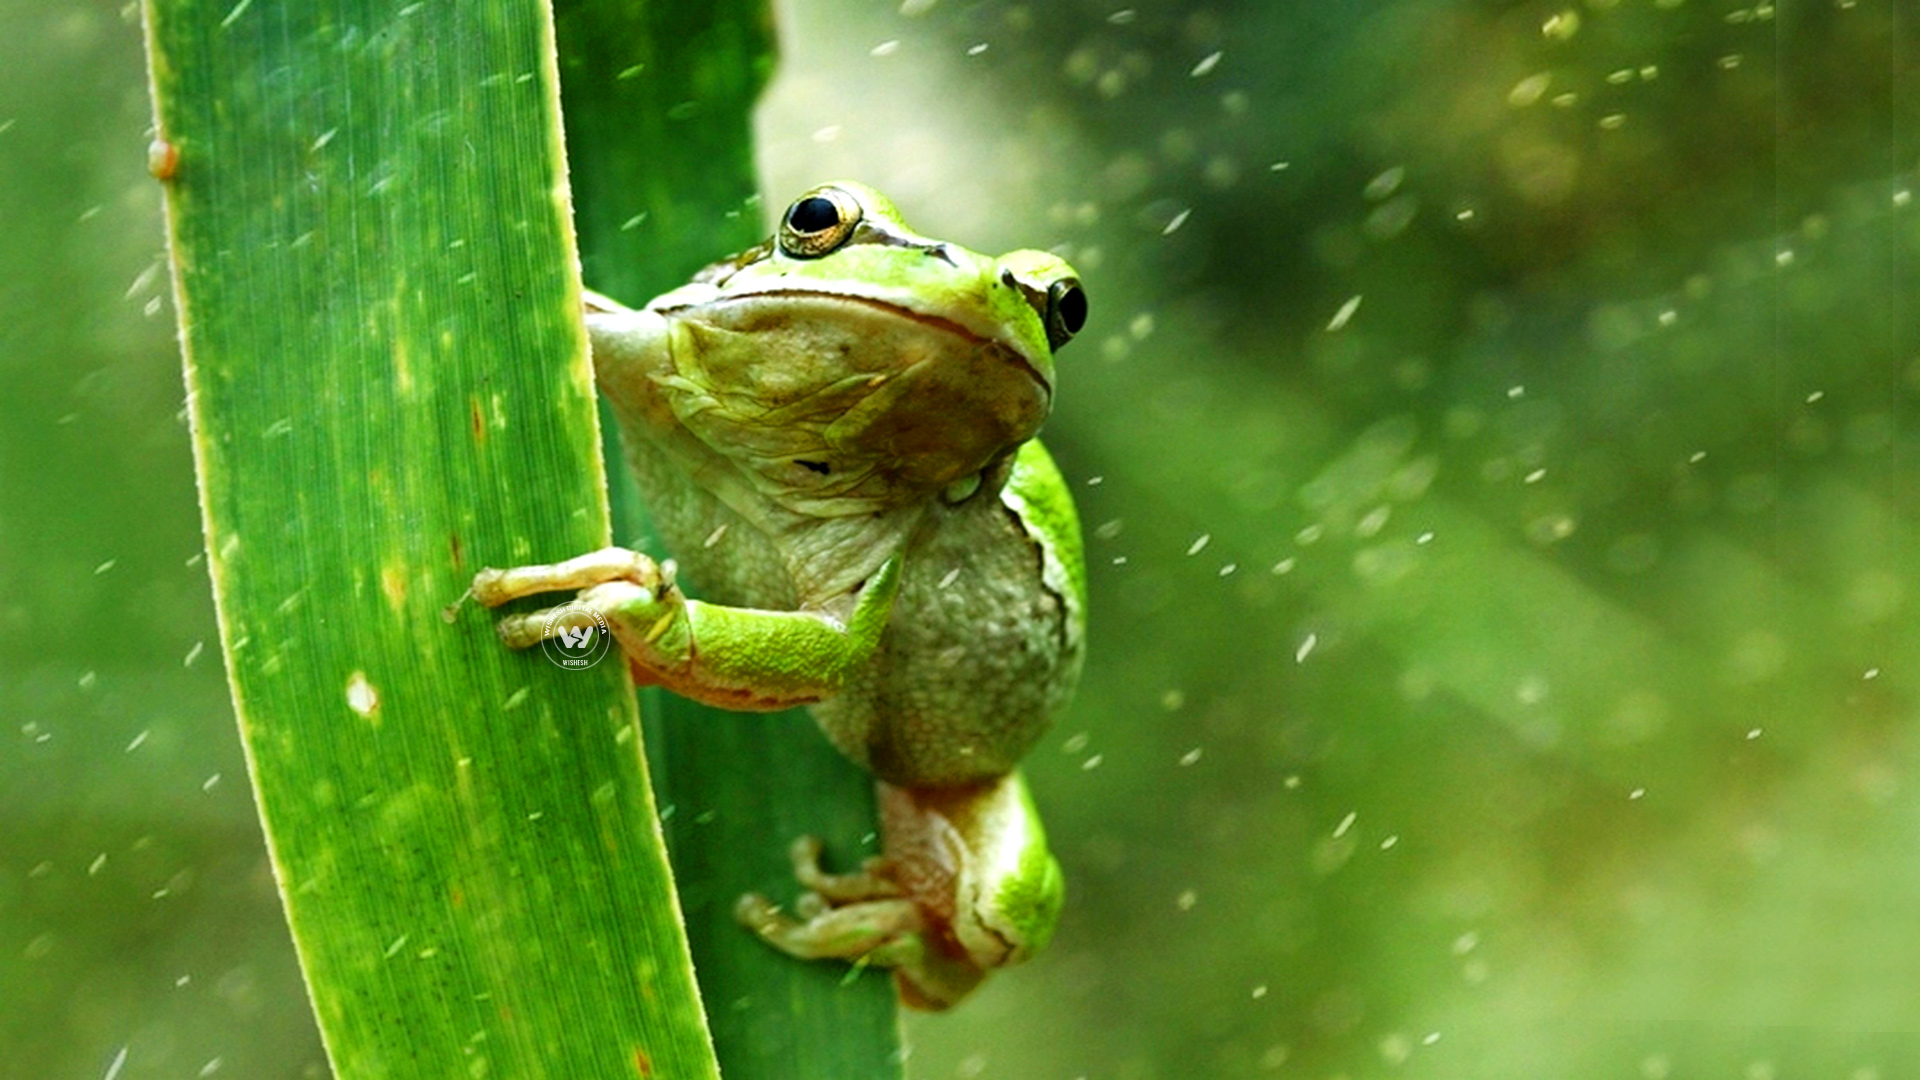 Frog in the rain | Wallpaper 2of 5 | Frog in the rain | rain